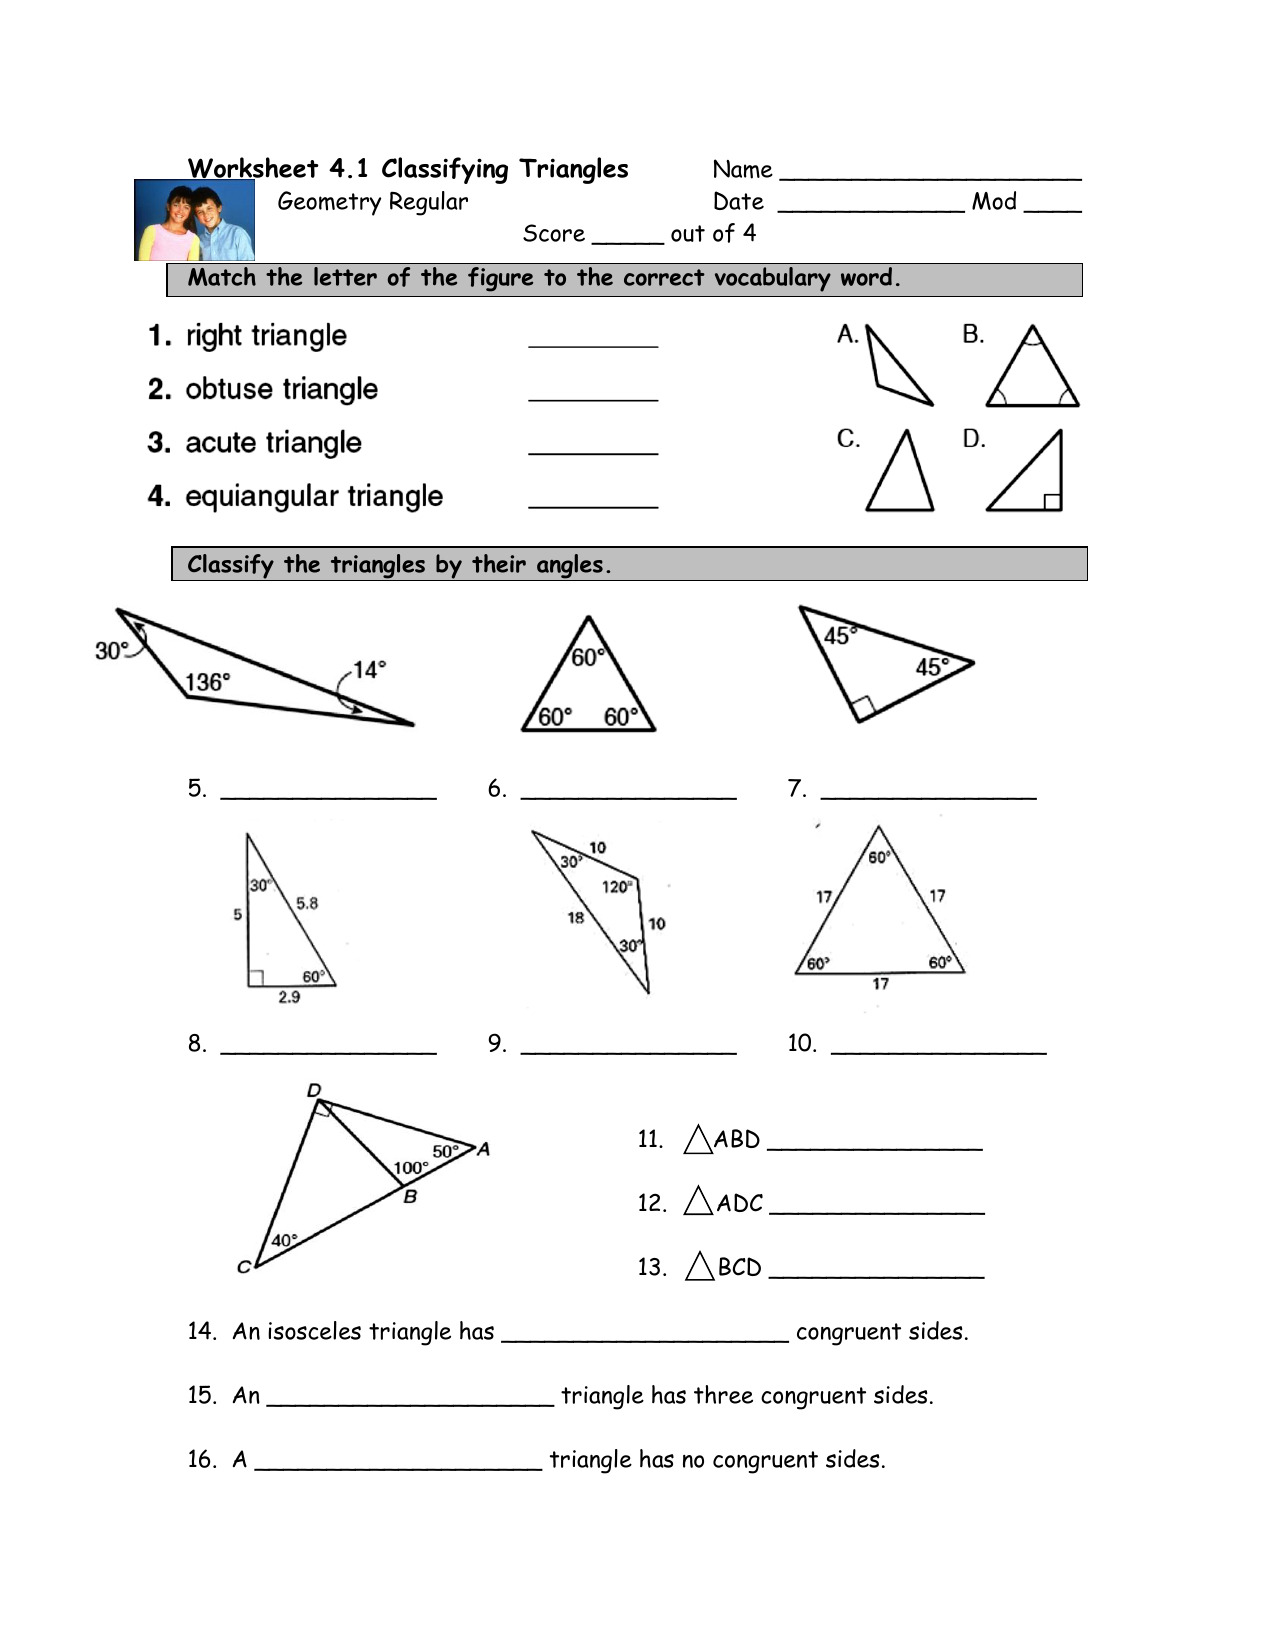 Classifying Triangles Worksheet Pdf 9349